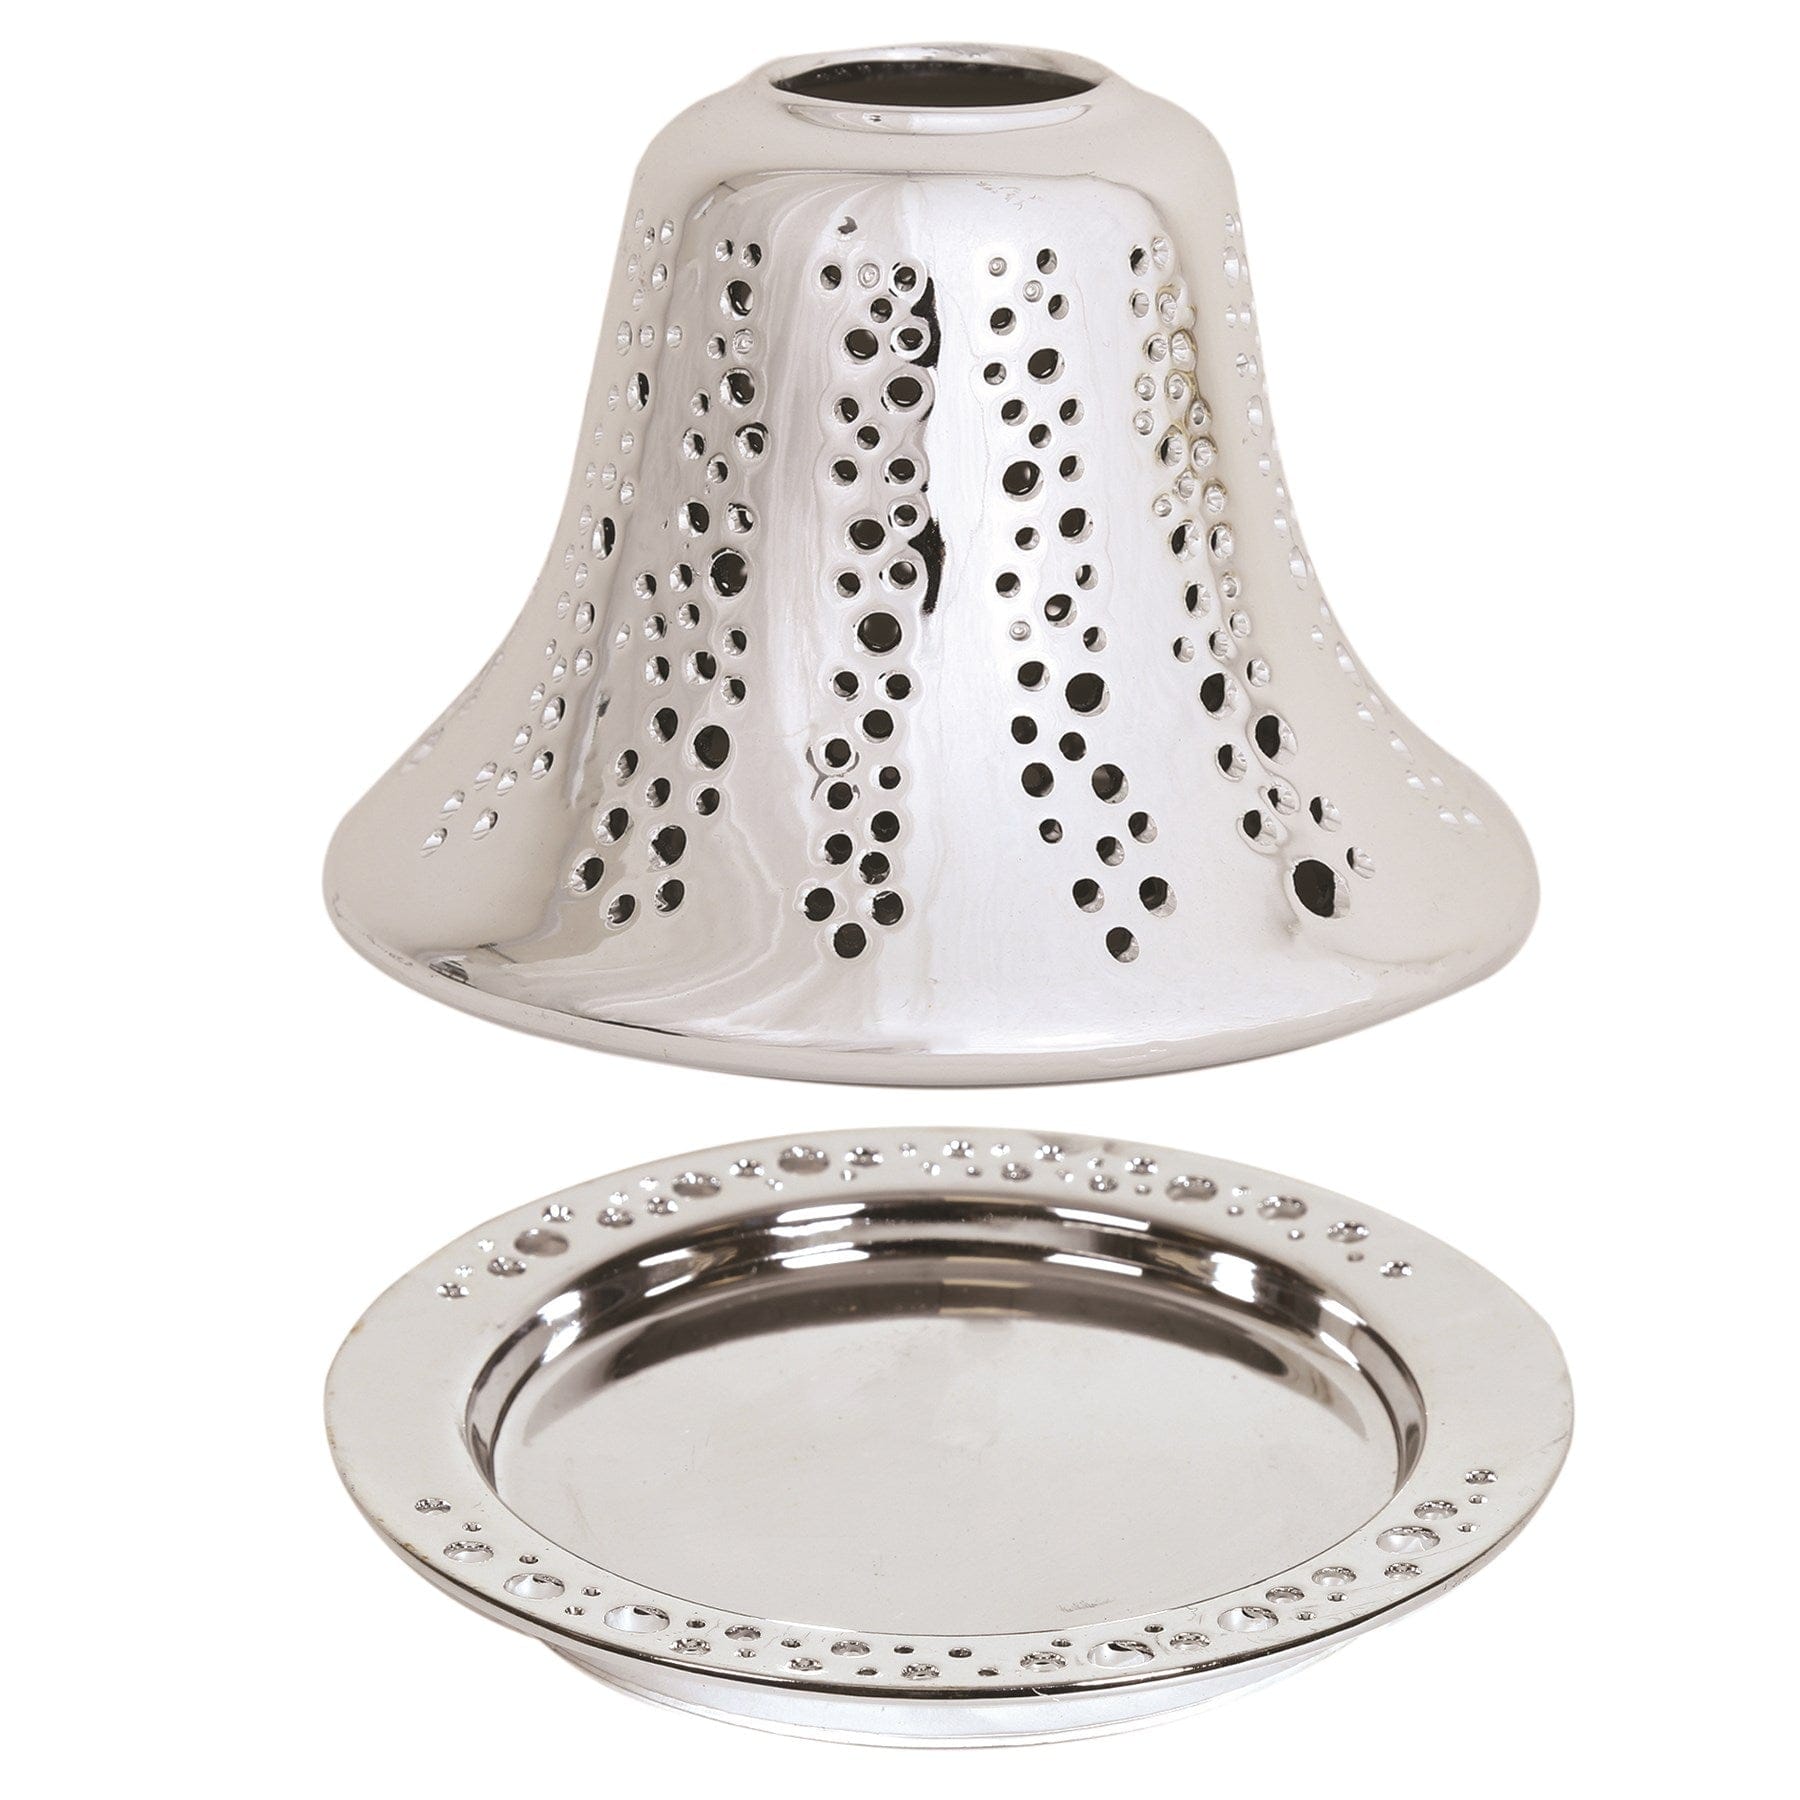 Aroma Accessories Large Shade & Tray Large Jar Candle Shade and Tray Set - Silver Iridium